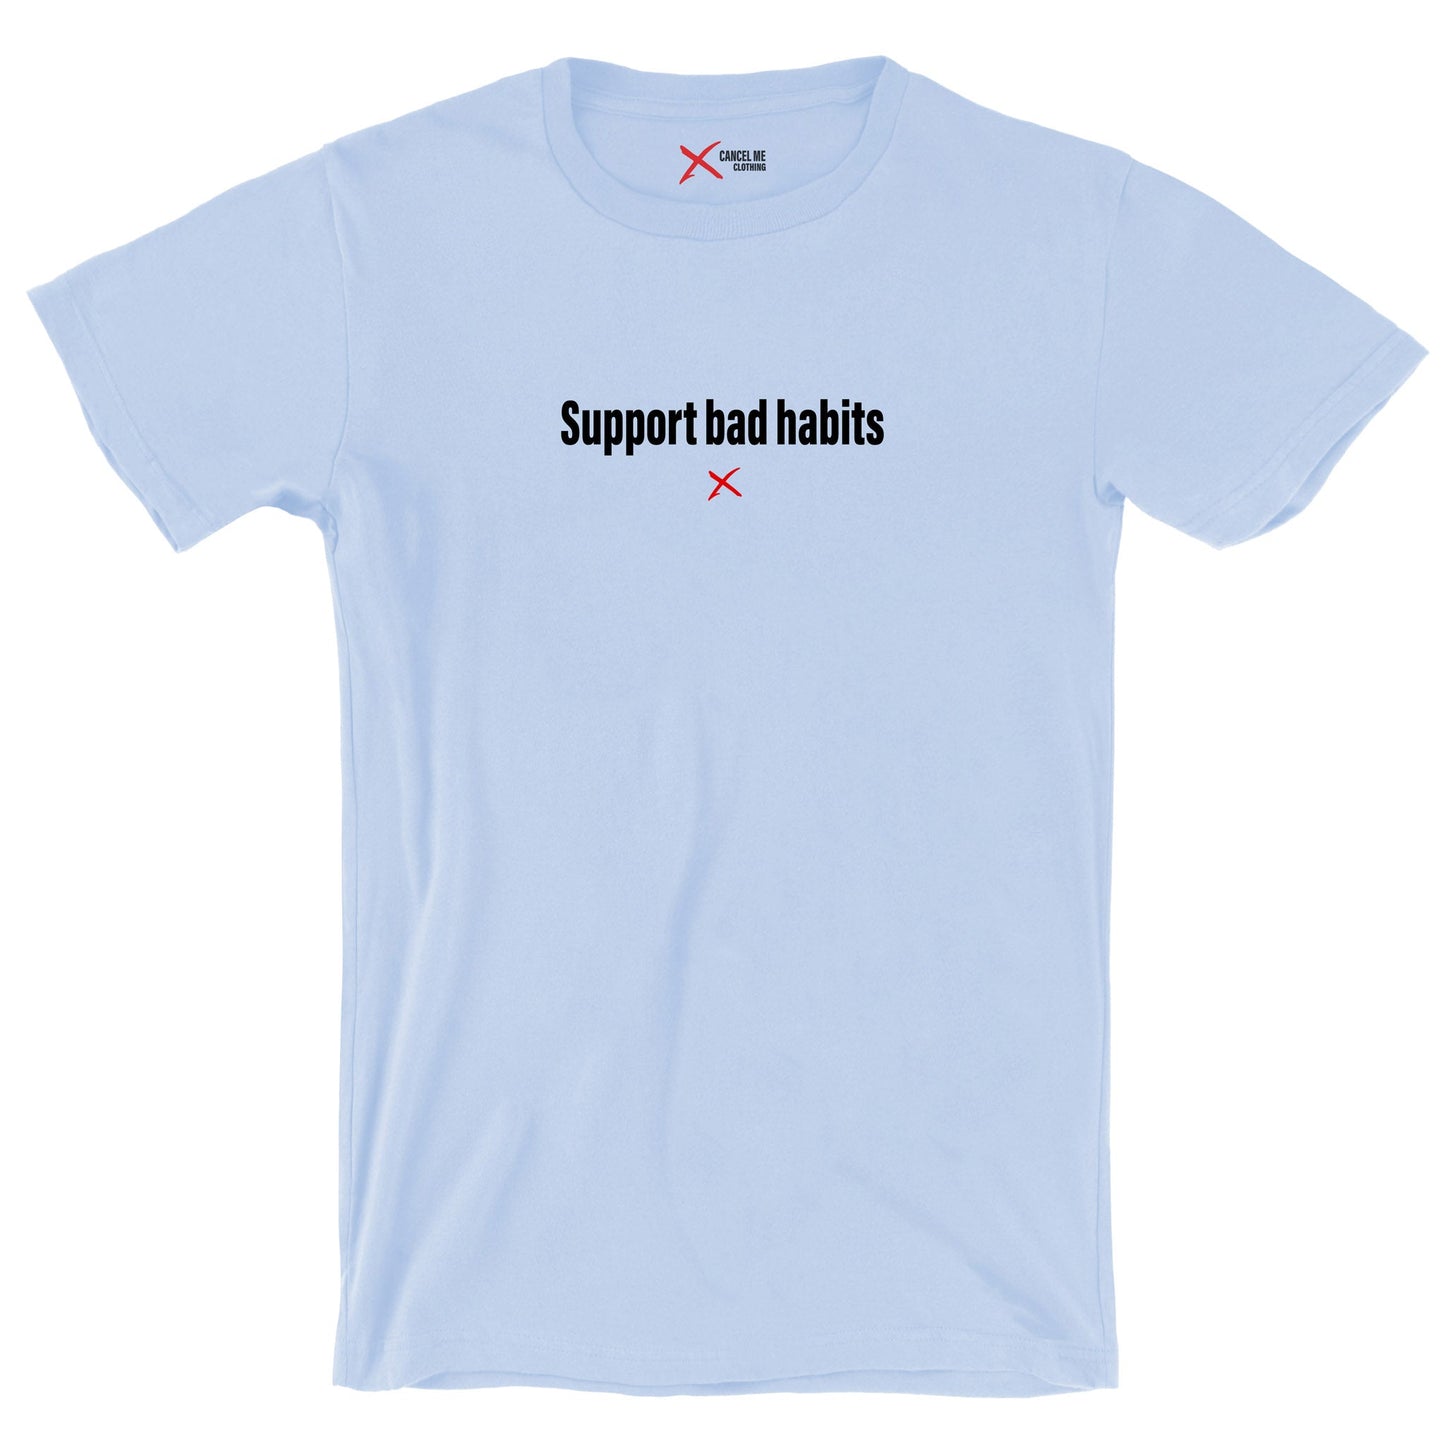 Support bad habits - Shirt